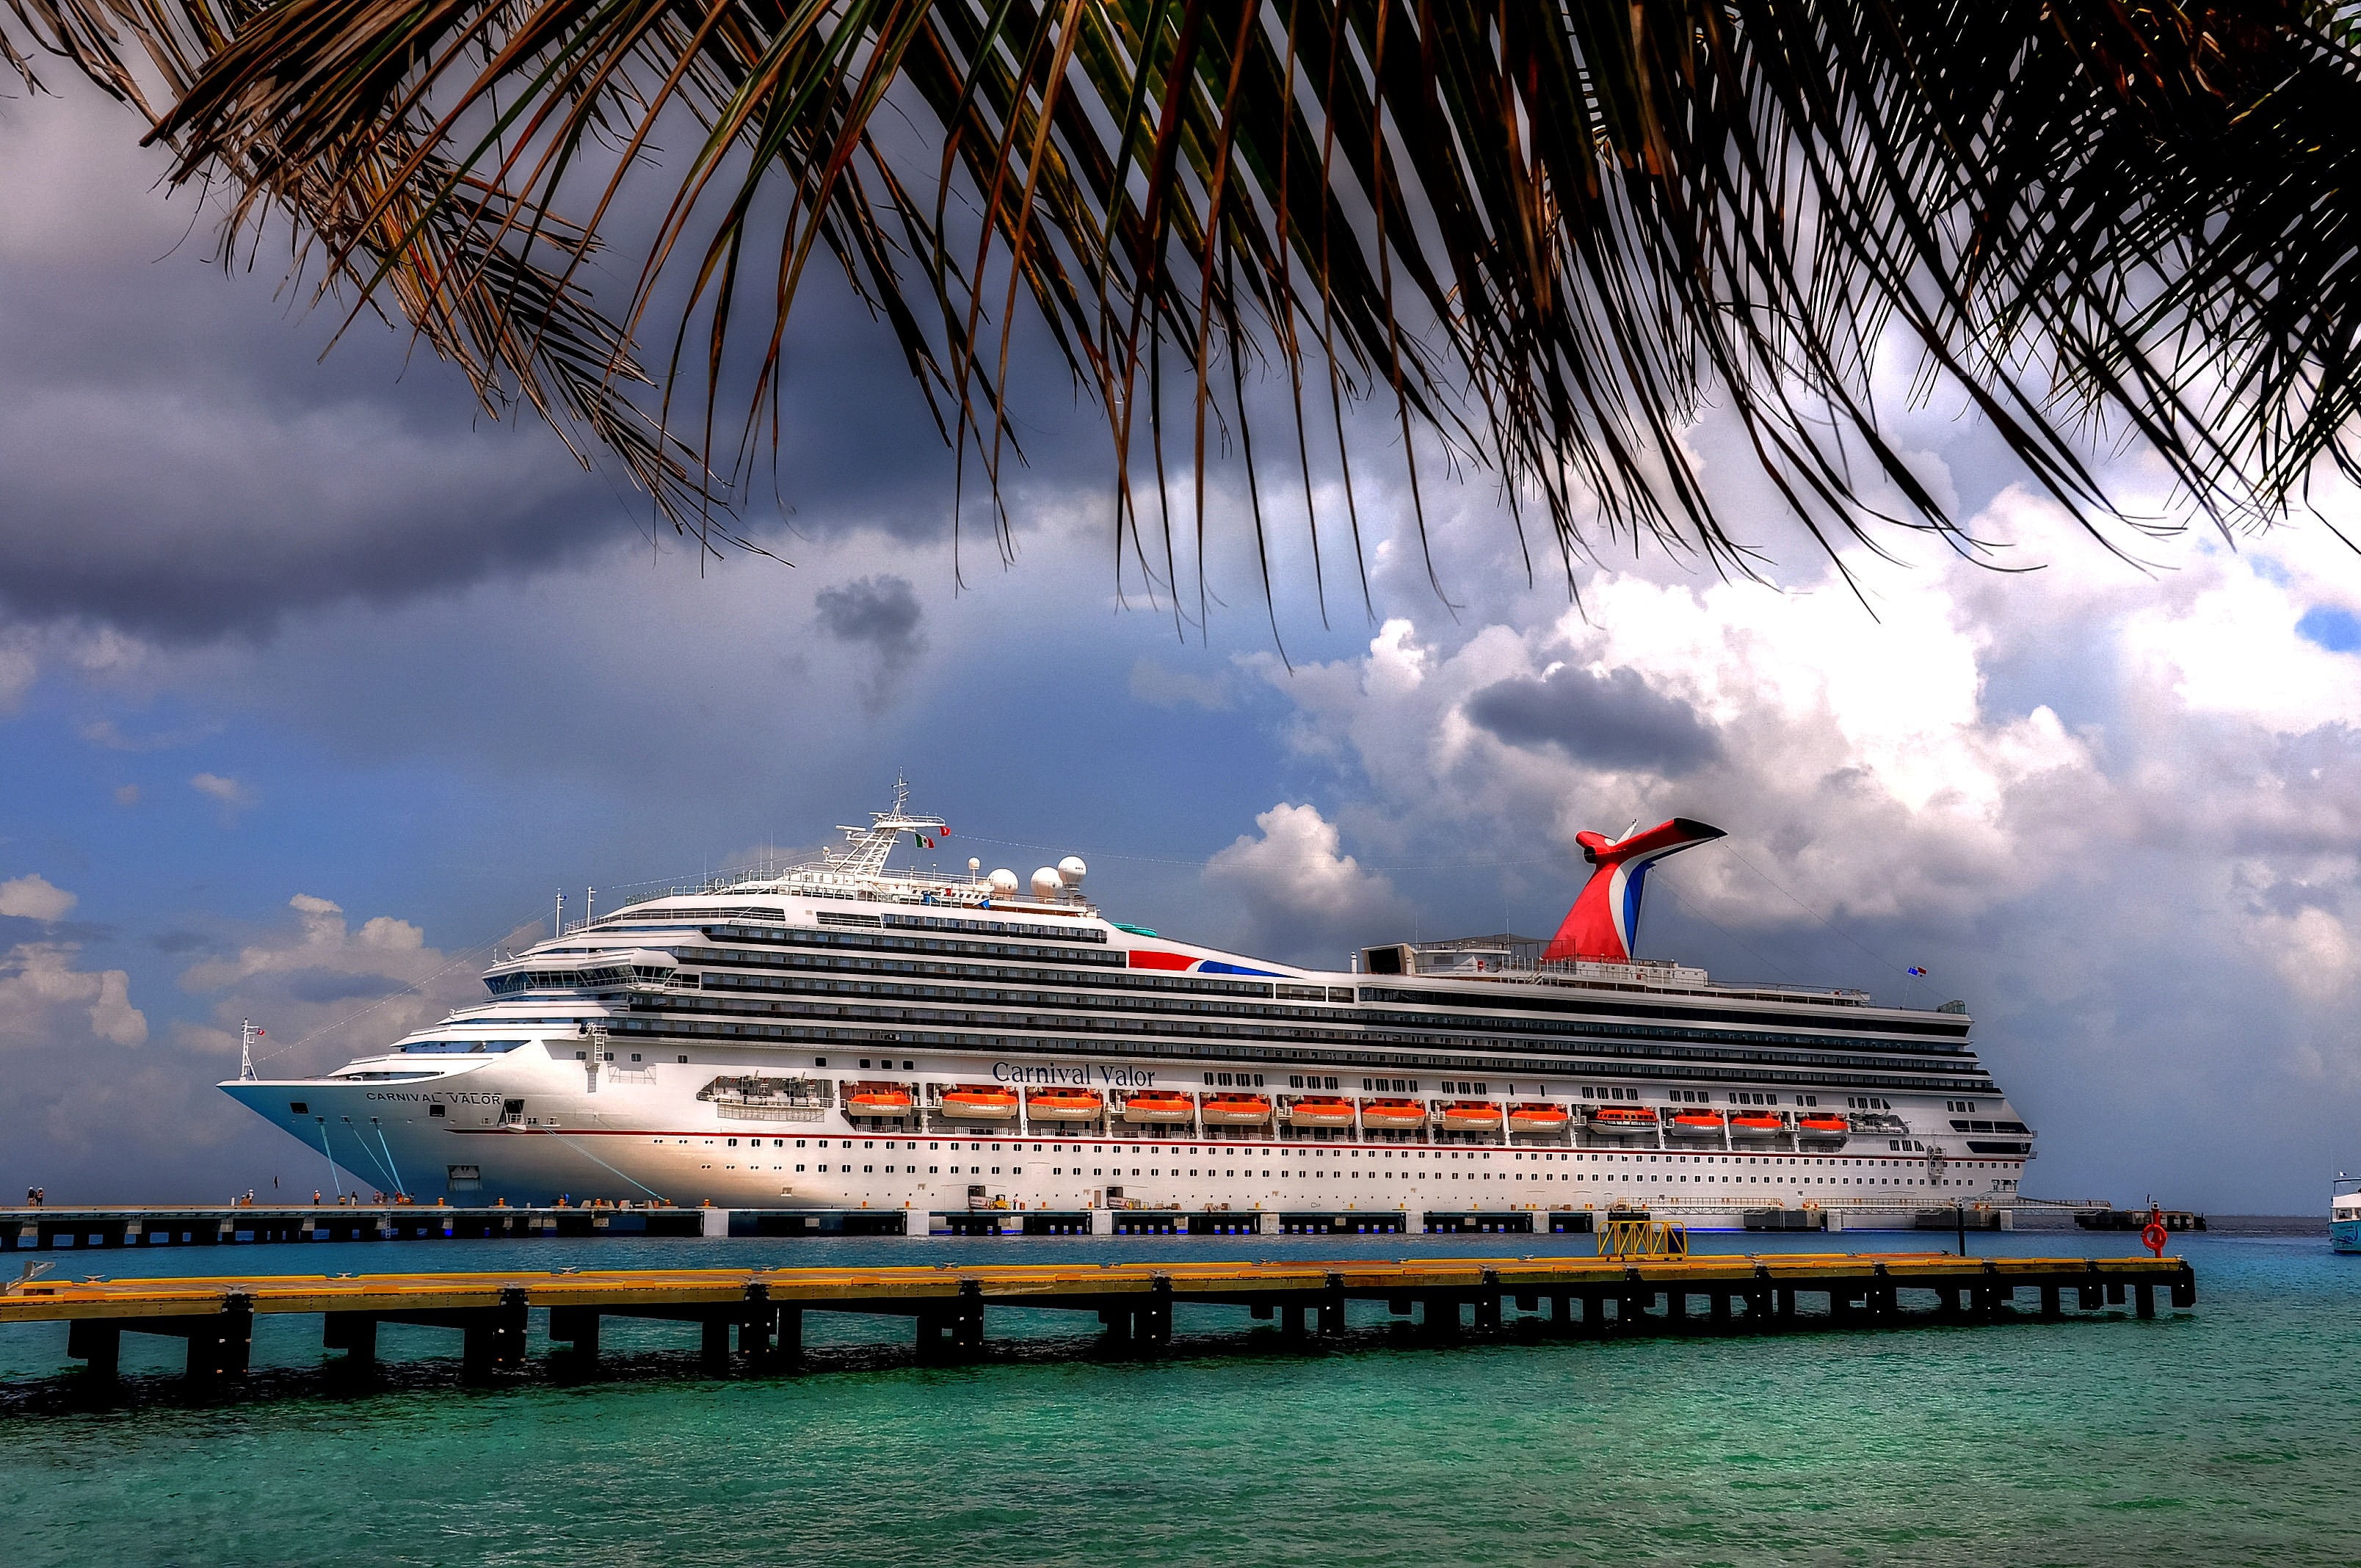 cruise ship, vehicle, cloud - sky, water, nautical vessel, transportation